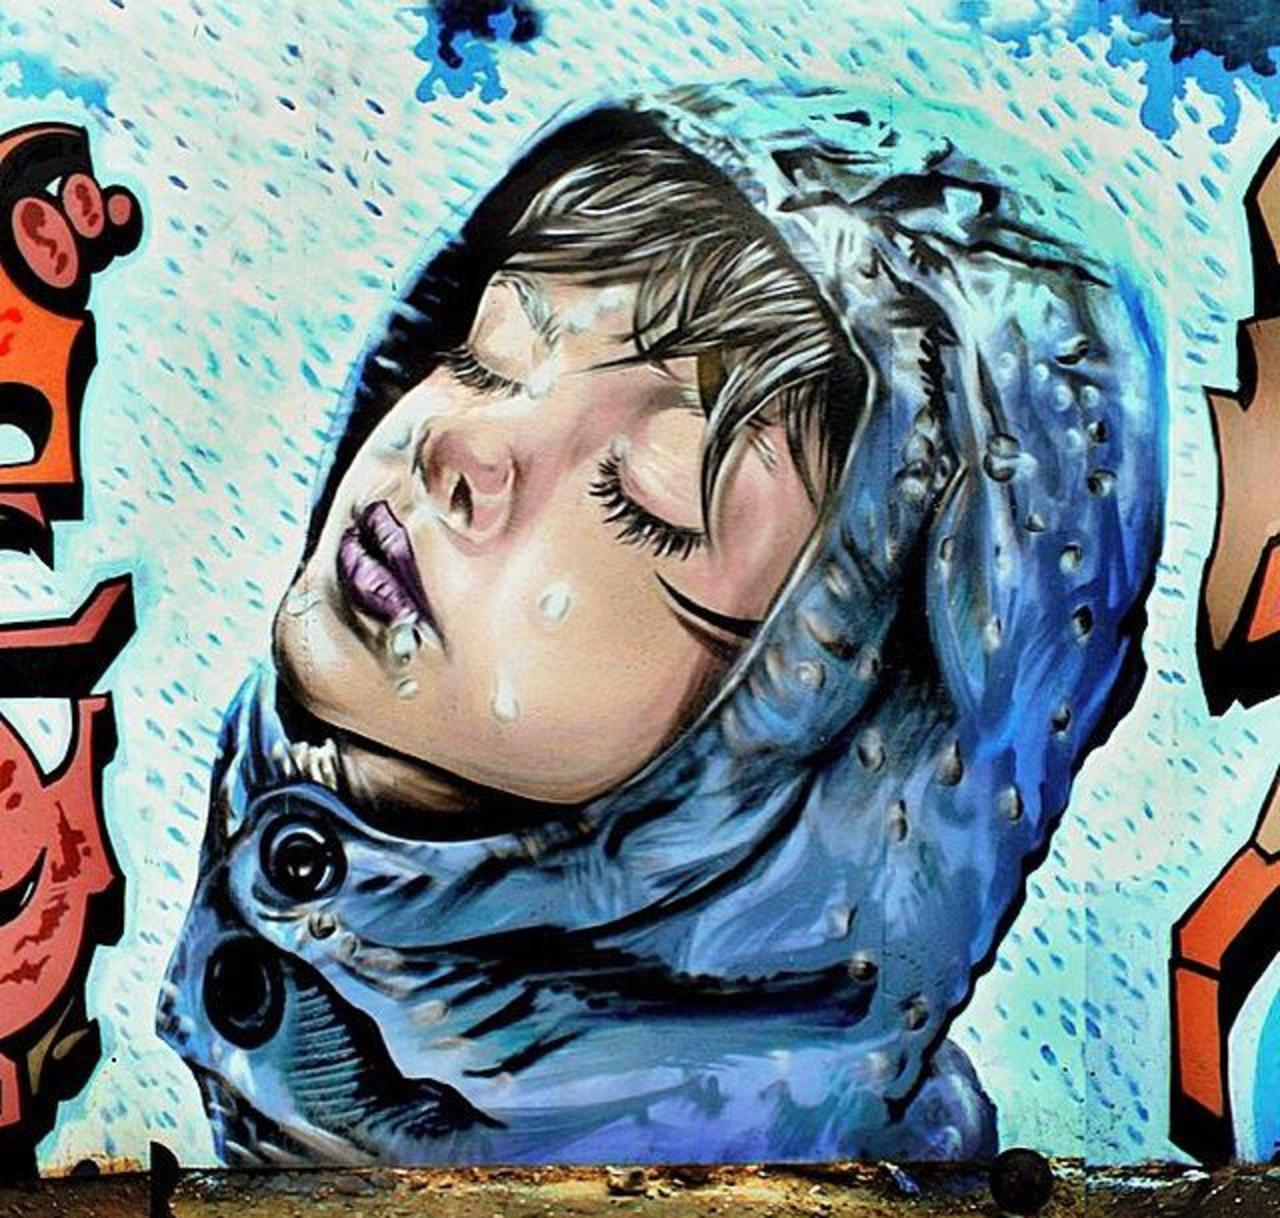 Street Art by the artist' Spooksoistreet' titled 'Raindrops' 

#art #arte #graffiti #streetart http://t.co/hze3qPtvKb